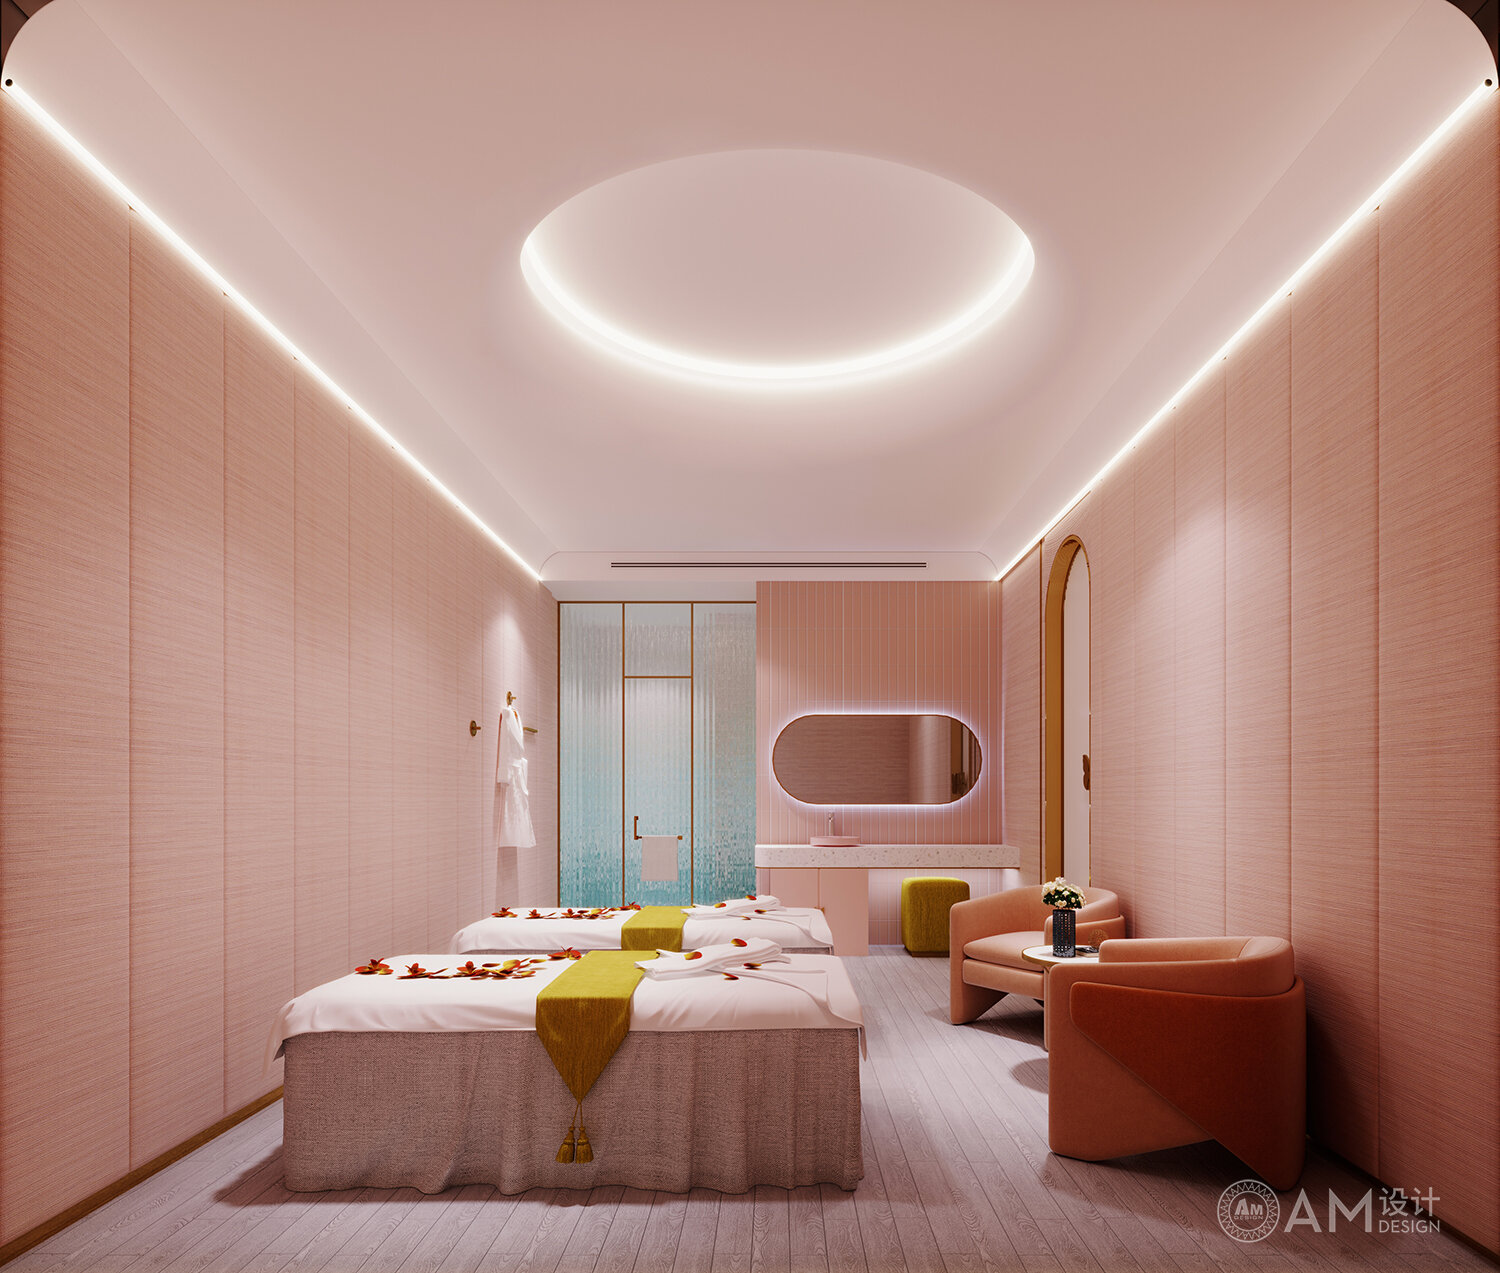 AM | Antisen Beauty Academy Design_VIP Room